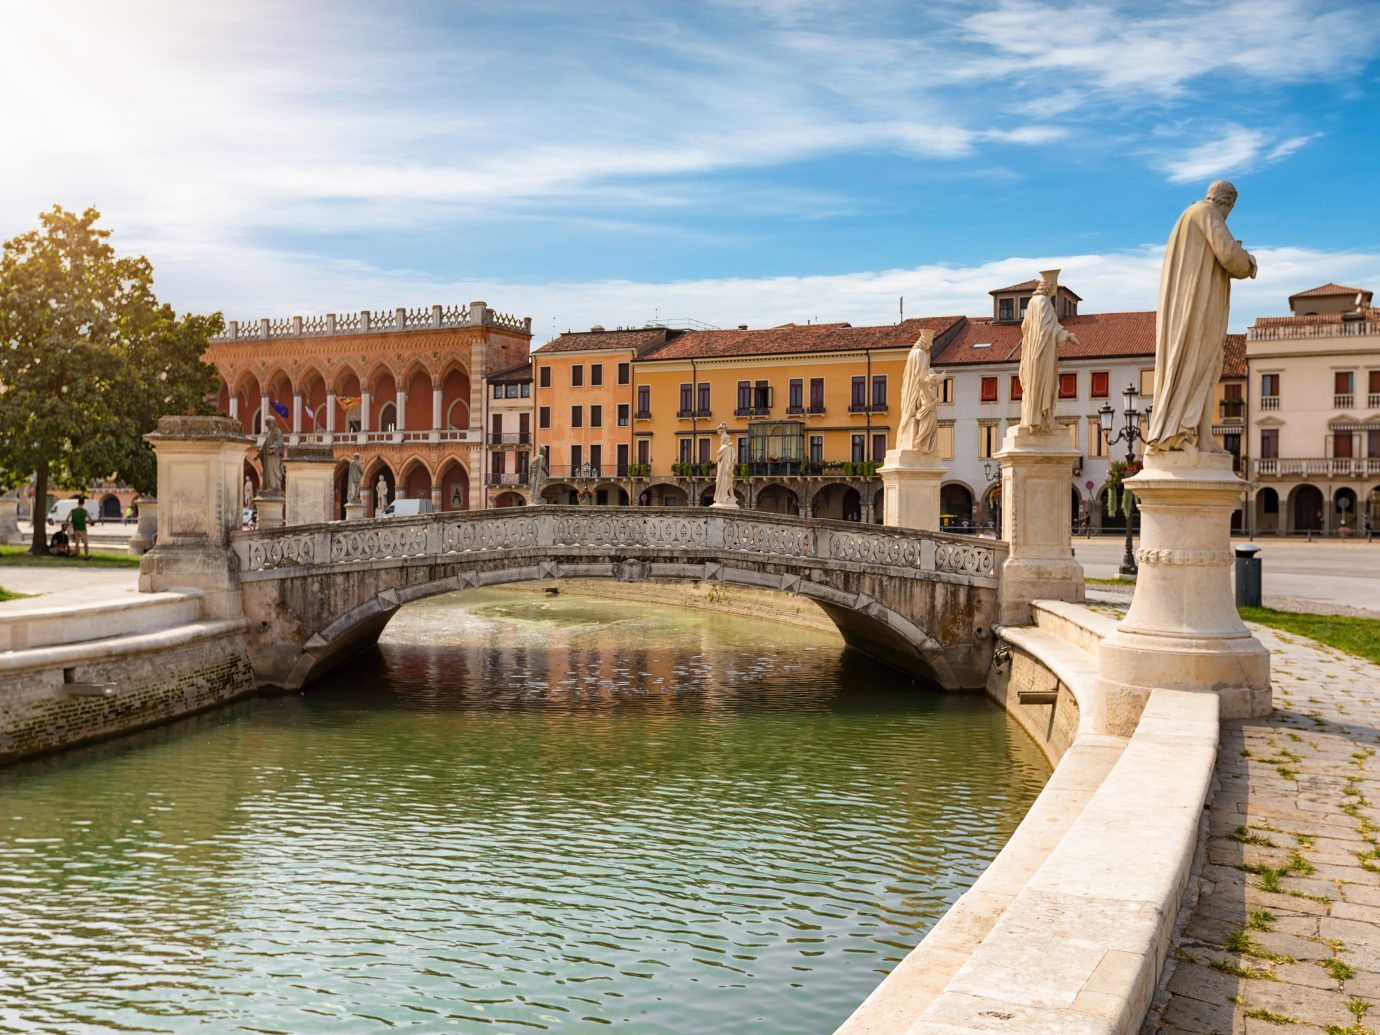 The Prato della Valle Square in Padova, Italy, with it`s canals and bridges